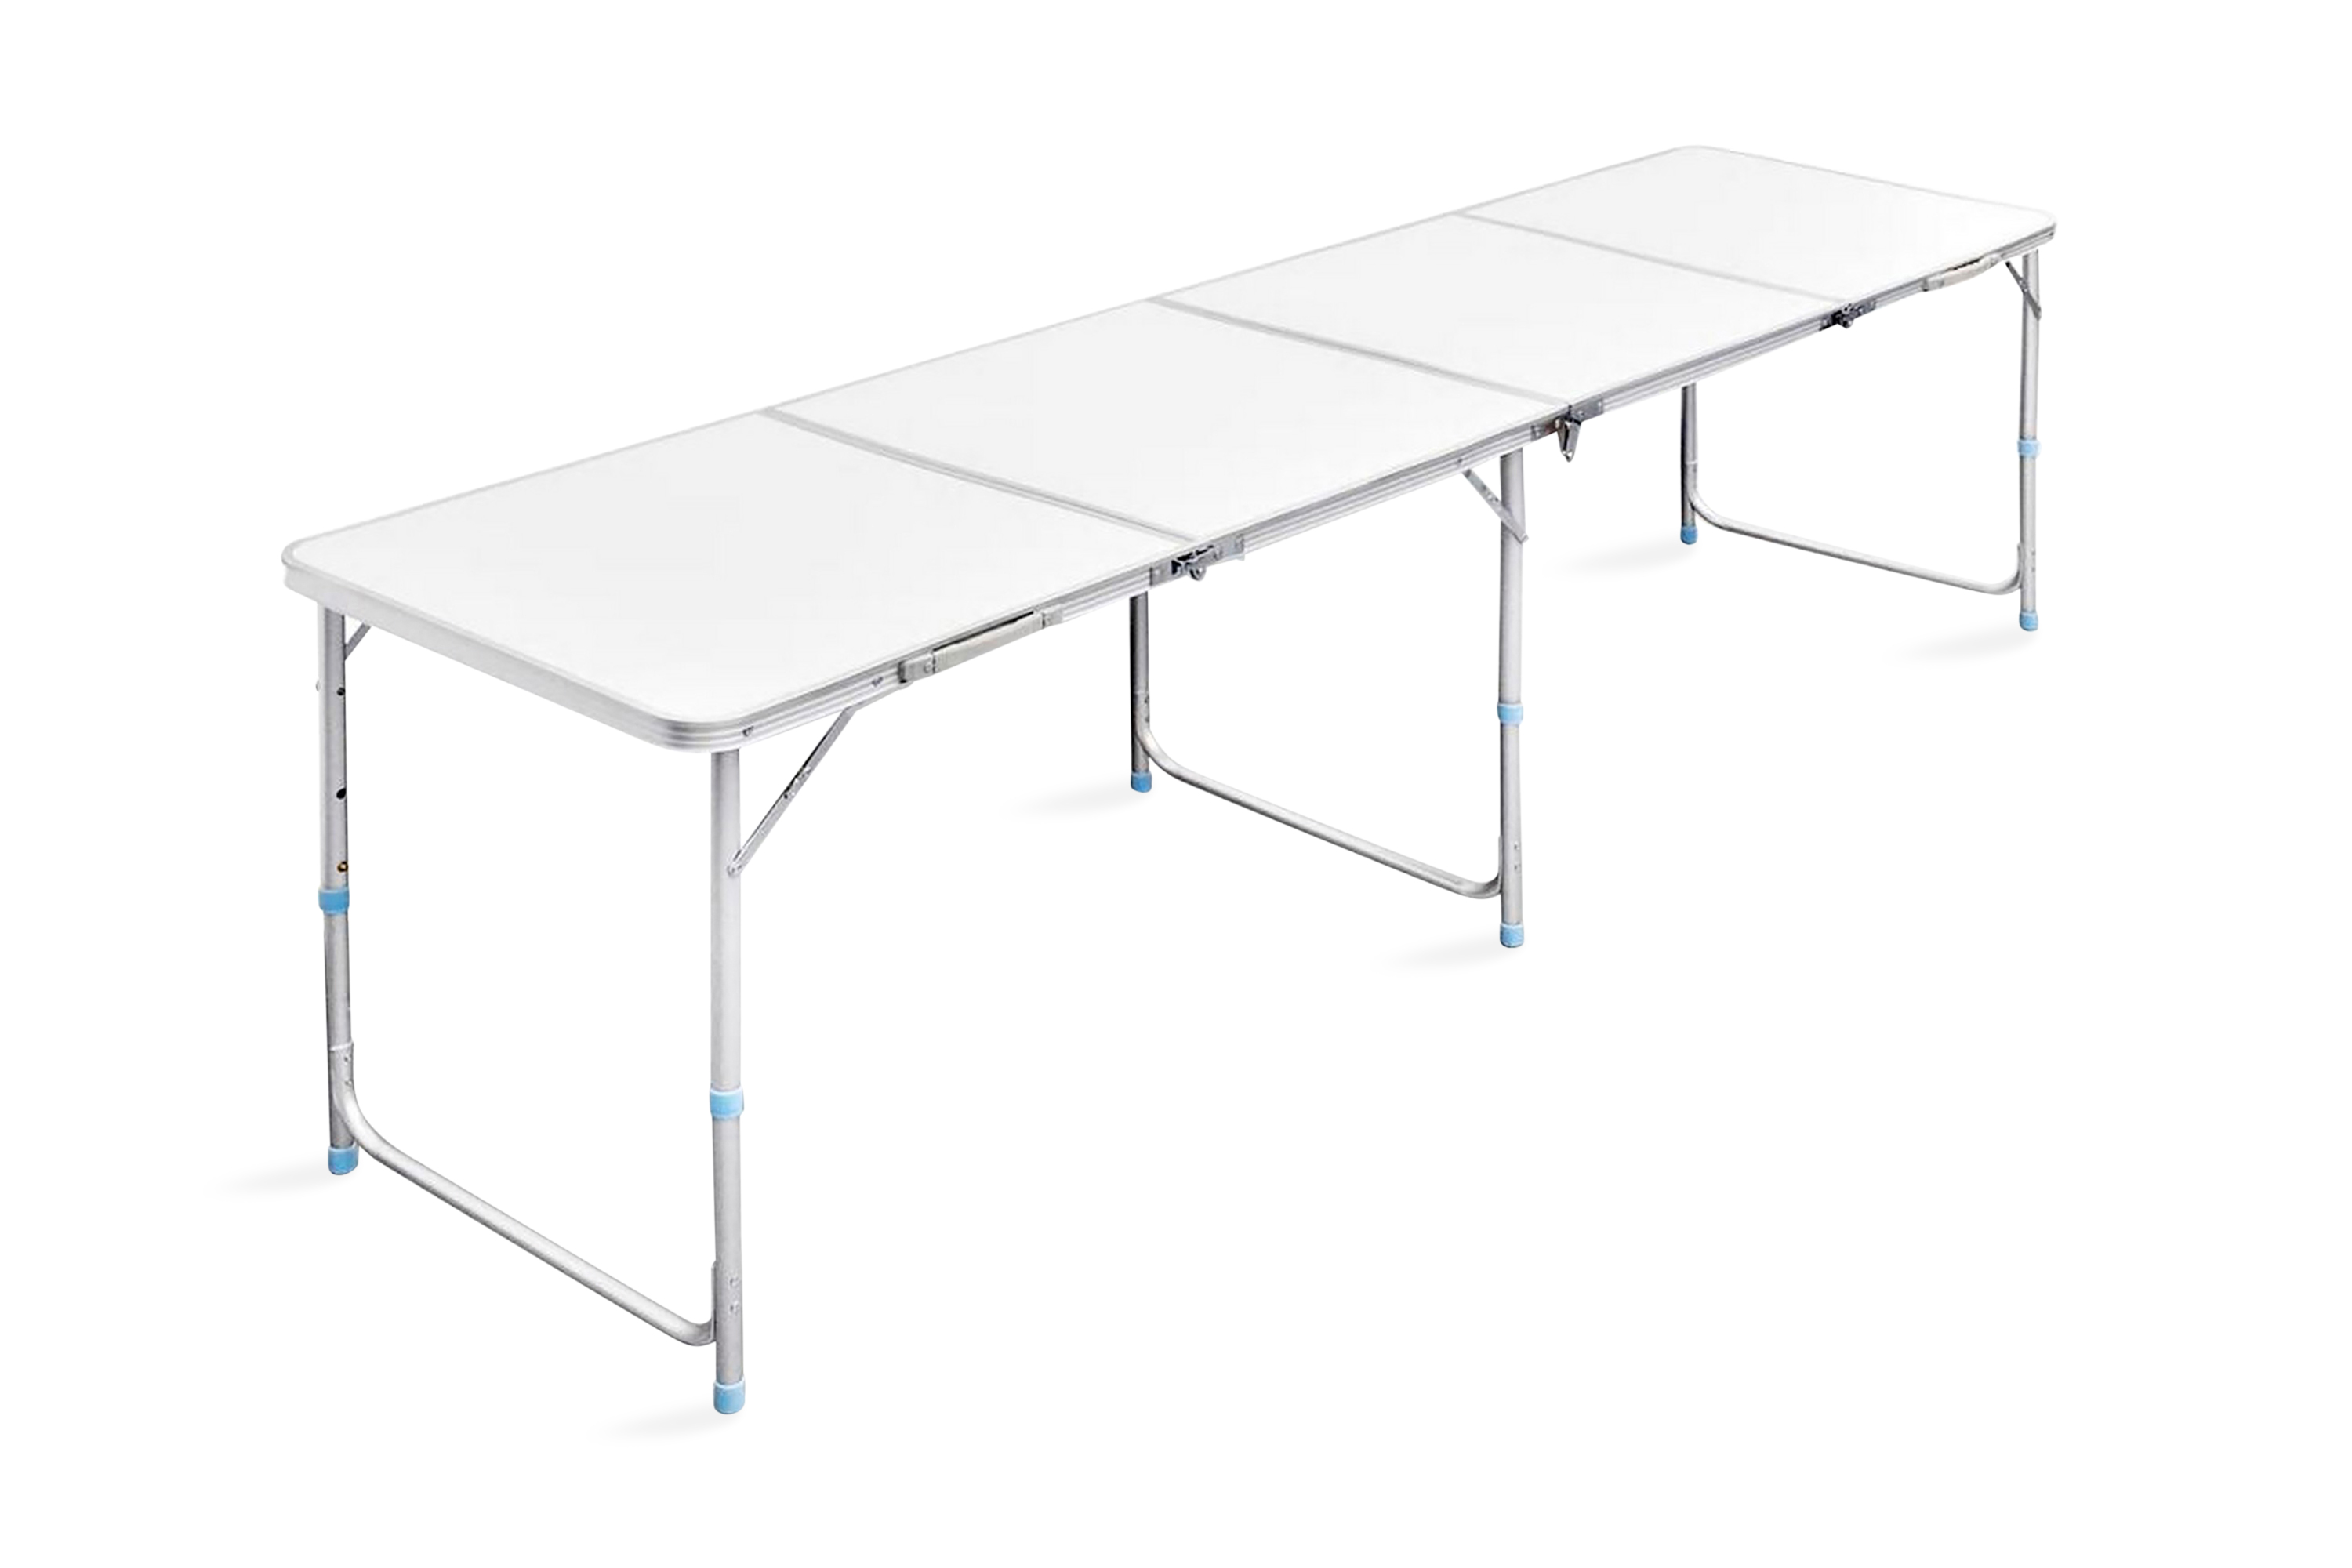 Hopfällbart campingbord med justerbar höjd Aluminium 240×60 – Vit